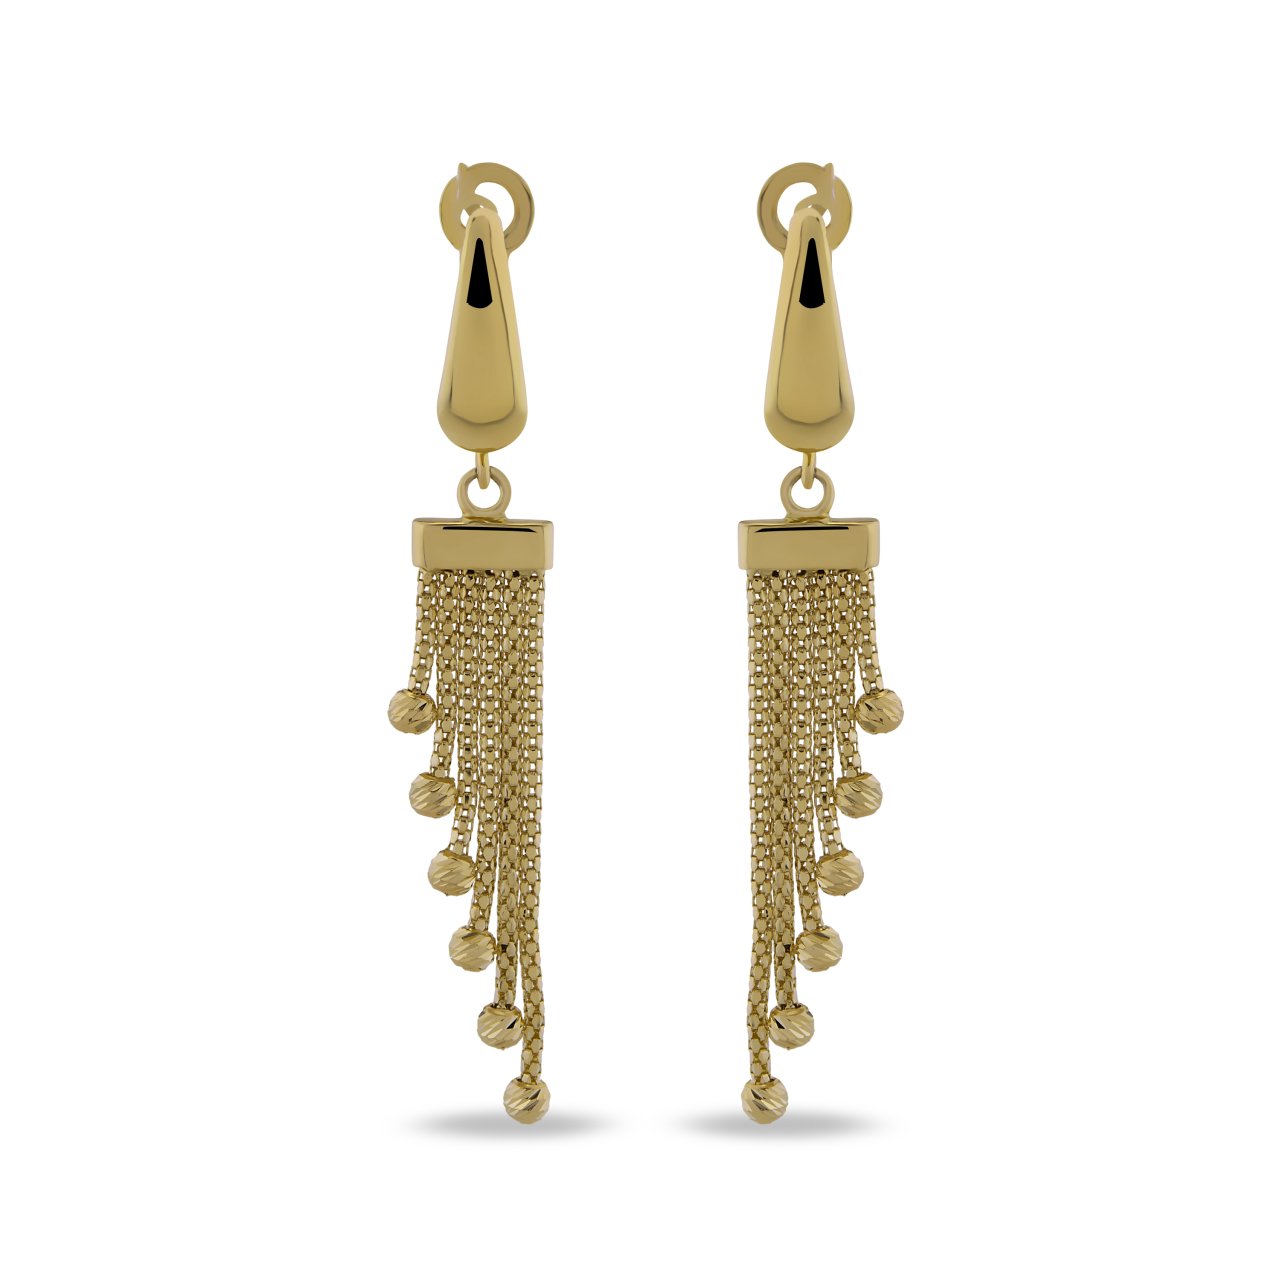 Pin by Godavari on No more | Gold earrings wedding, Drop earrings, Gold